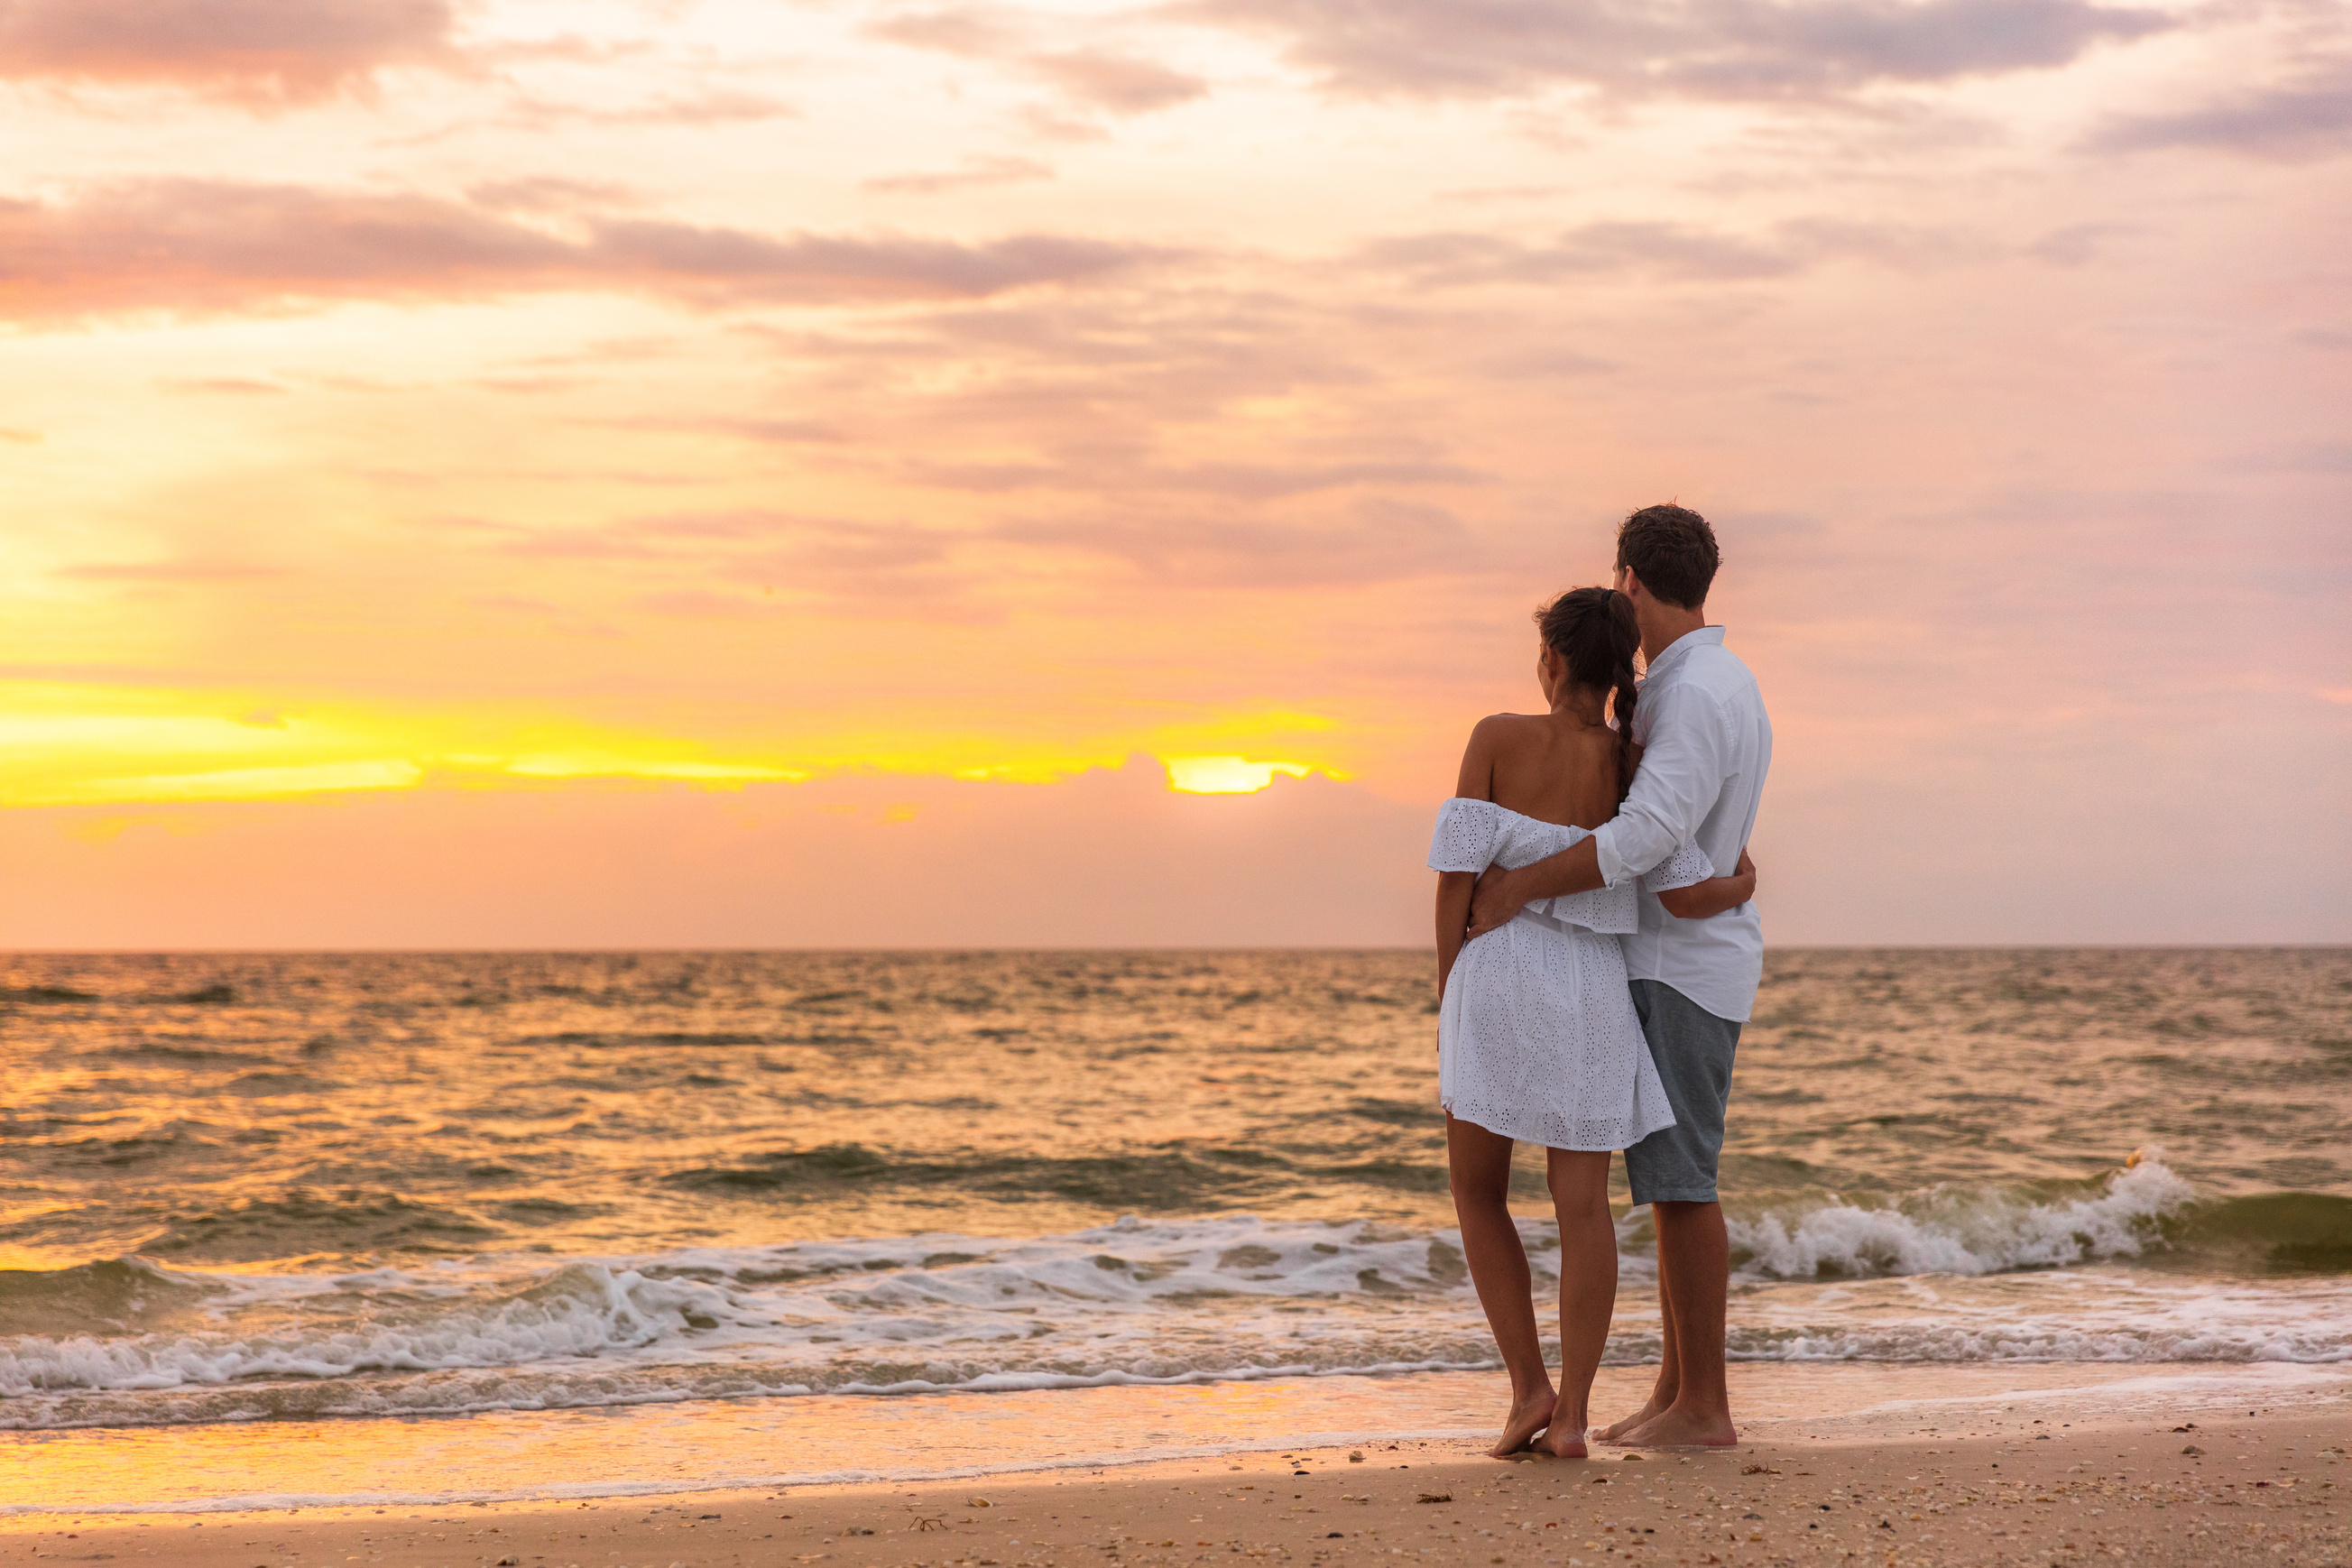 Couple Enjoying the Sunset at the Beach